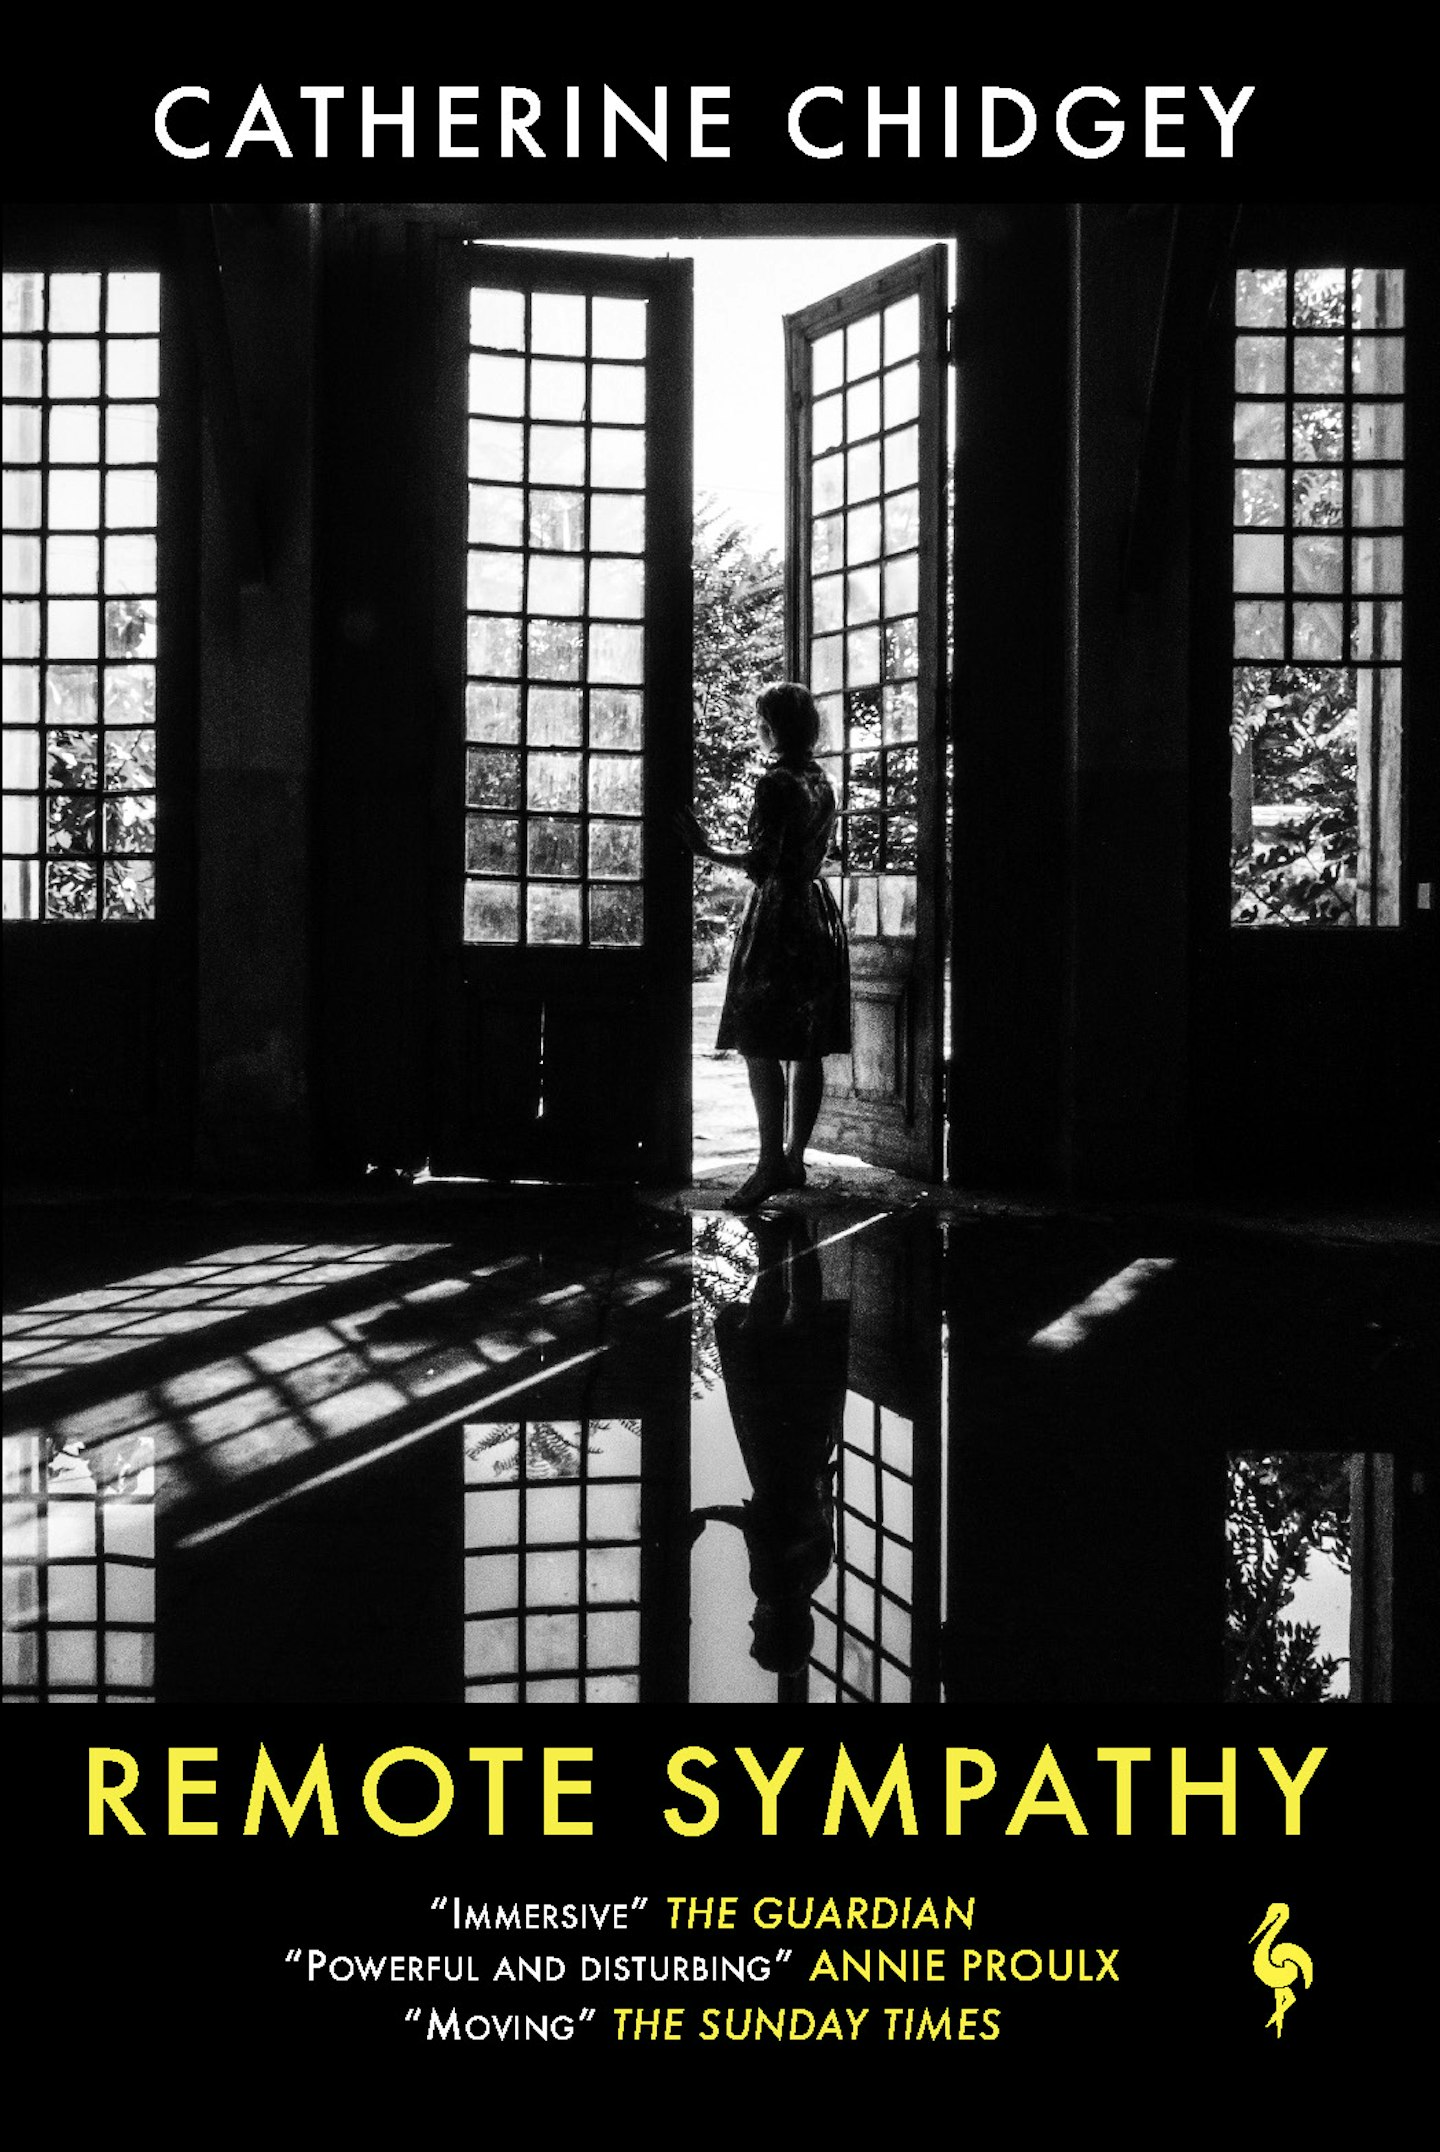 REMOTE SYMPATHY by Catherine Chidgey